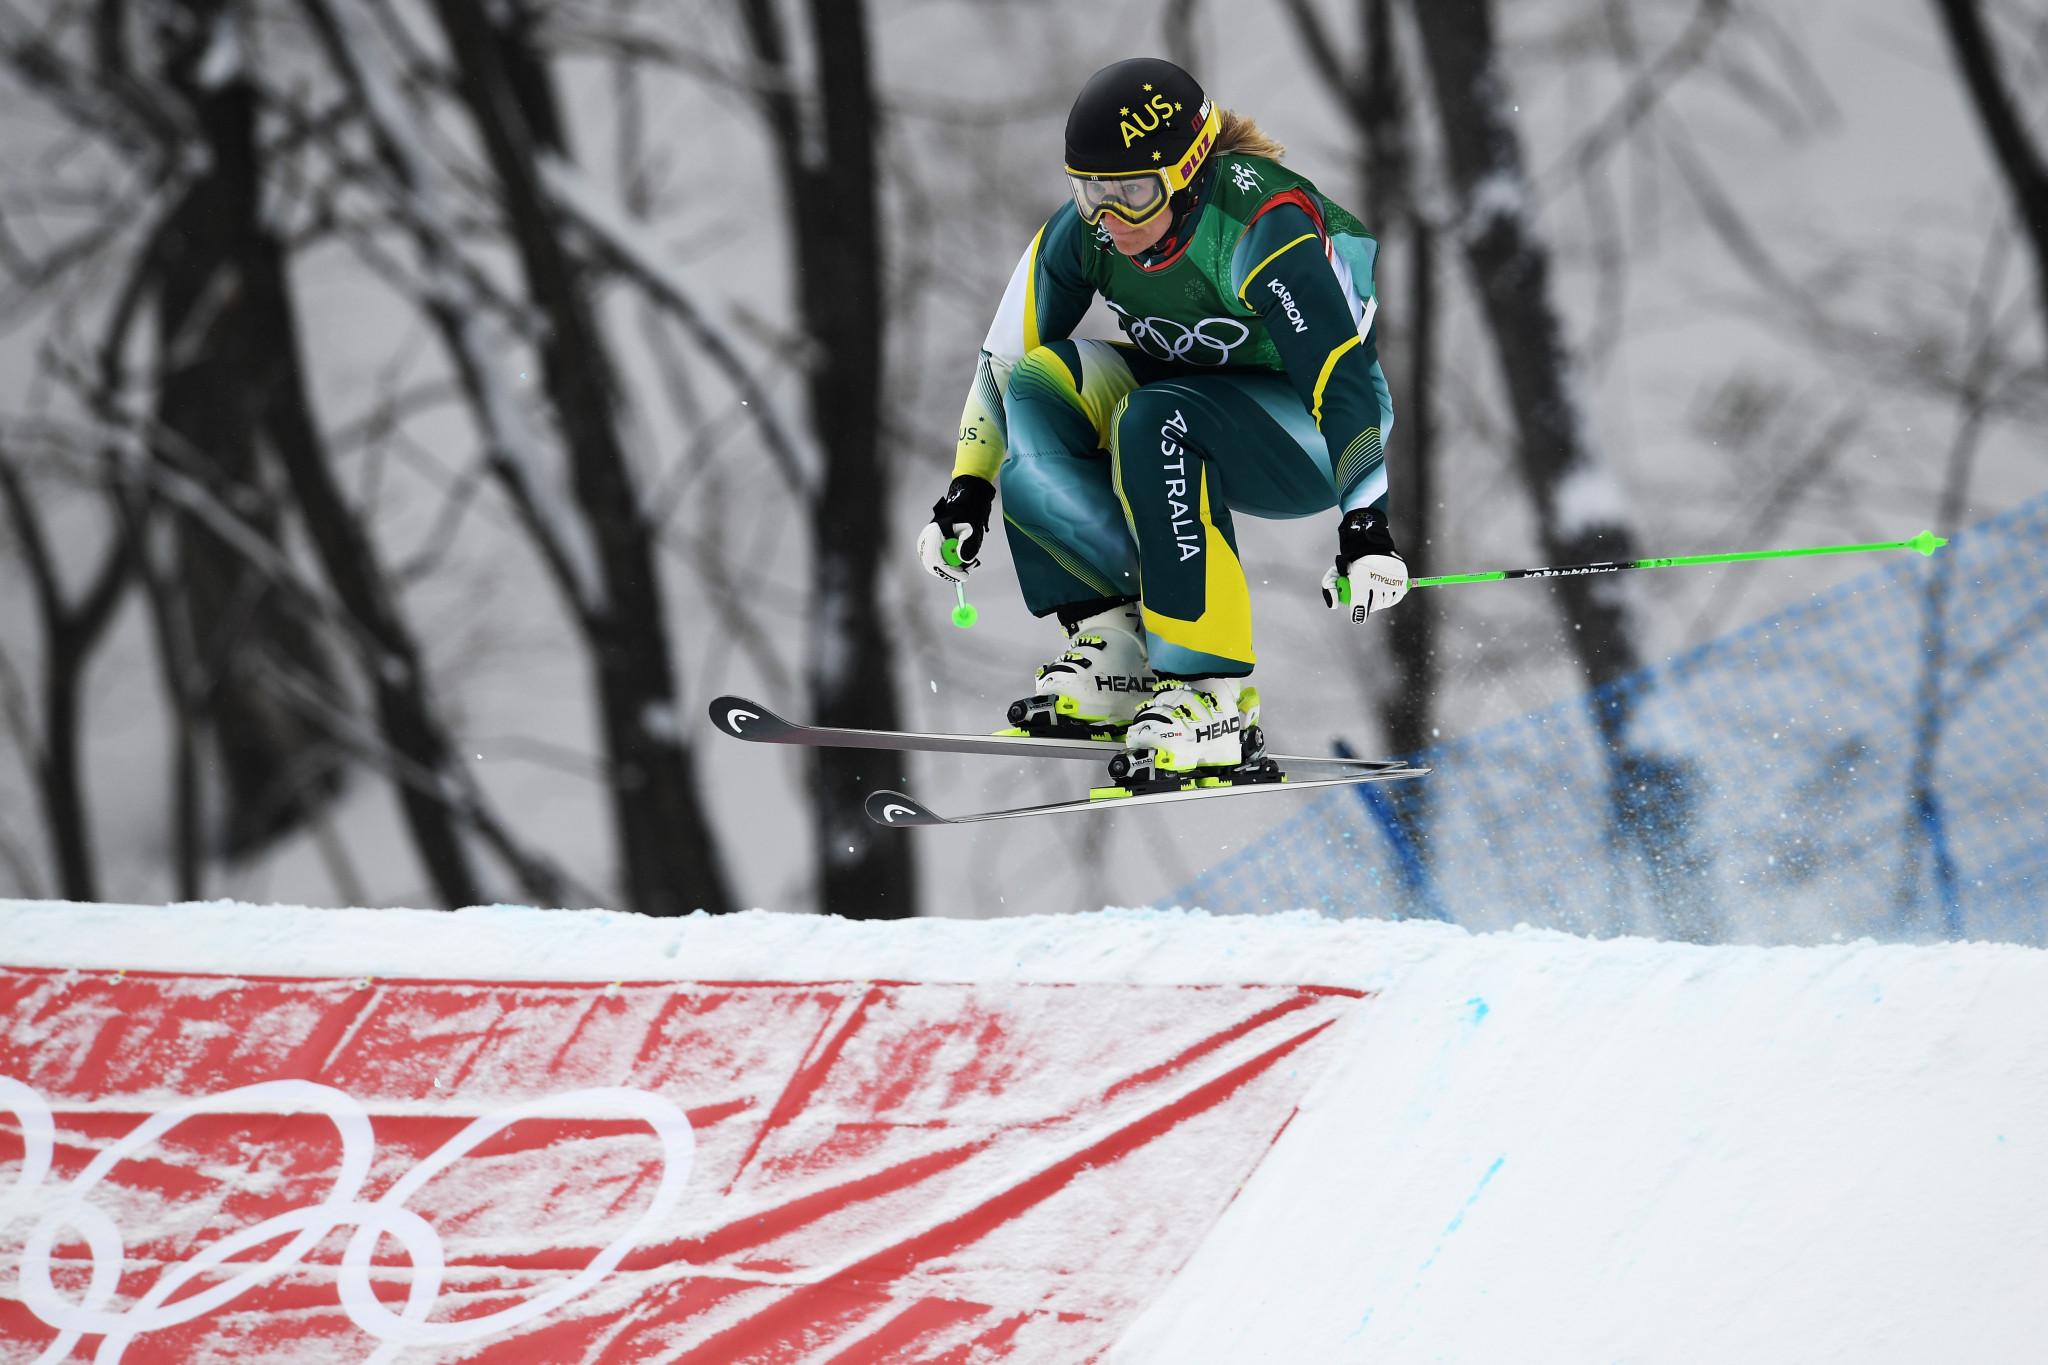 Ski cross athlete Sami Kennedy-Sim is a big fan of the Village Art scheme ©Getty Images